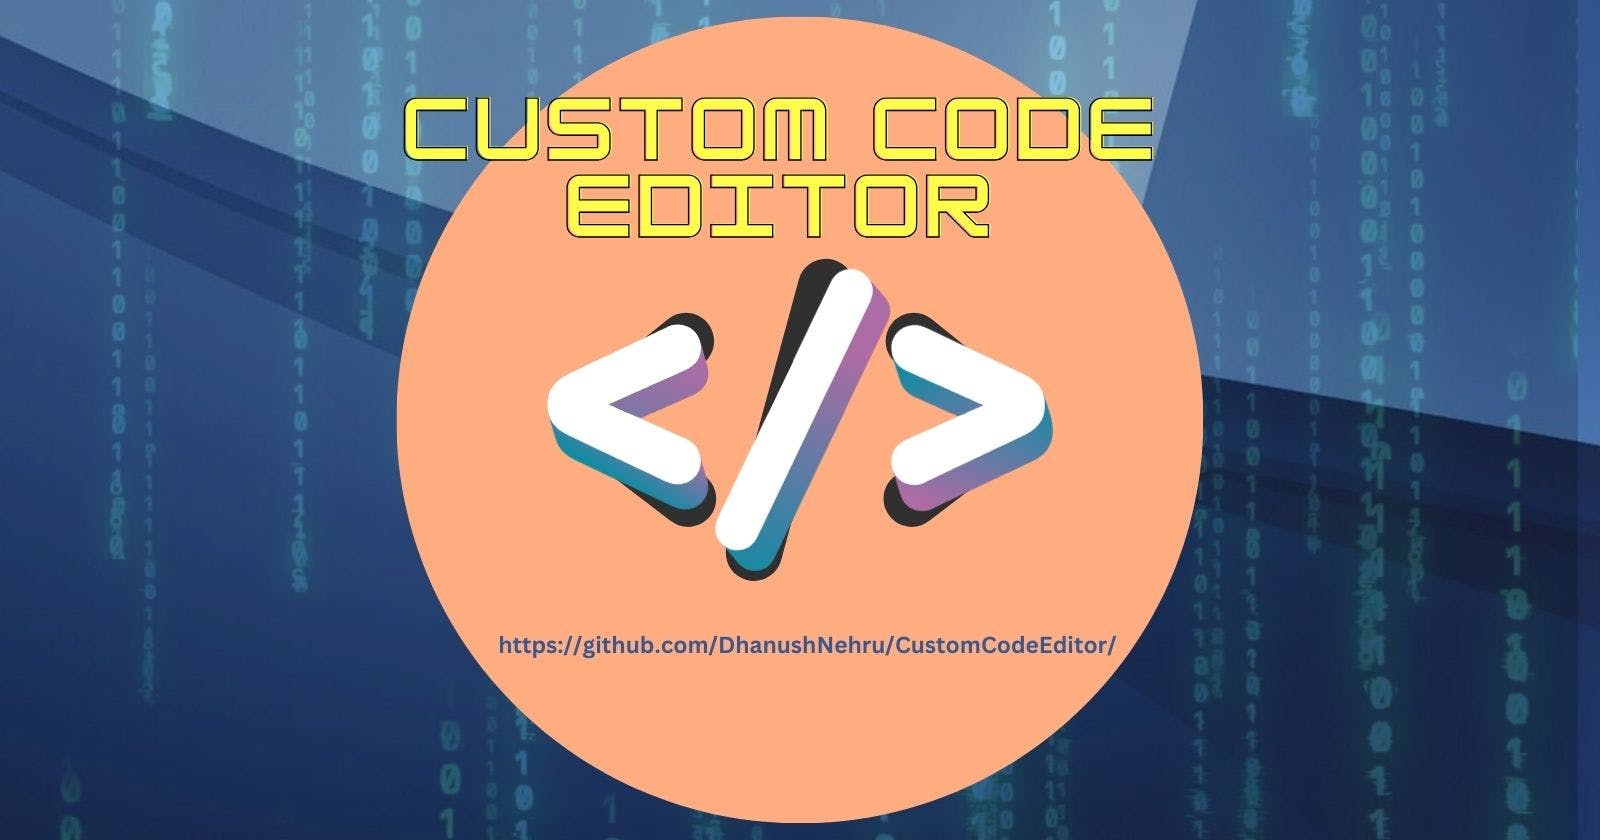 I created an Open Source Custom Code Editor